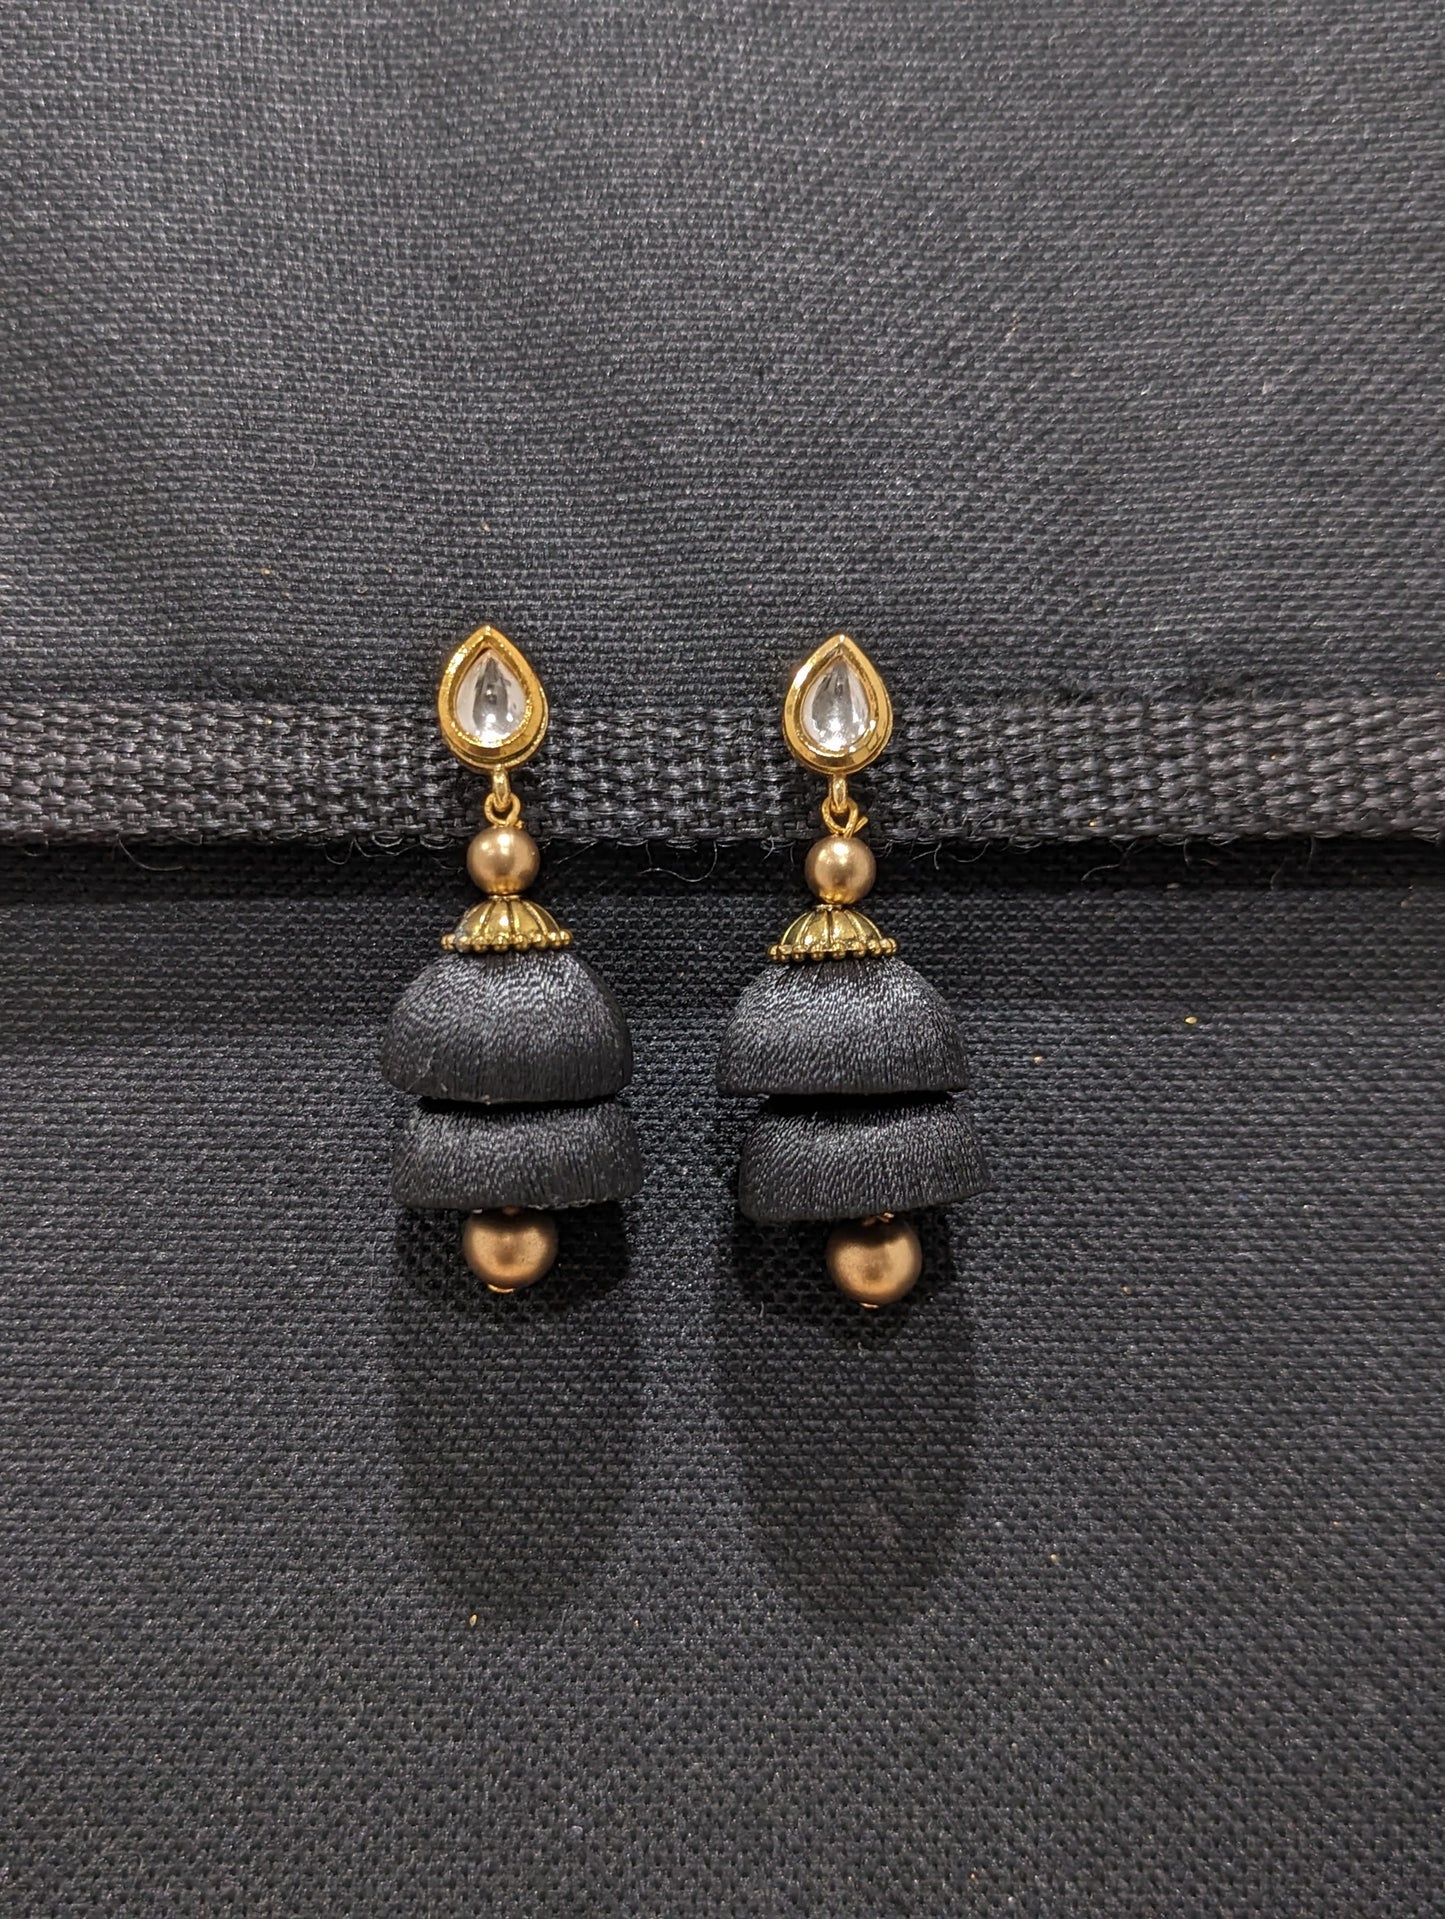 Silk thread double layer plain jhumka earrings